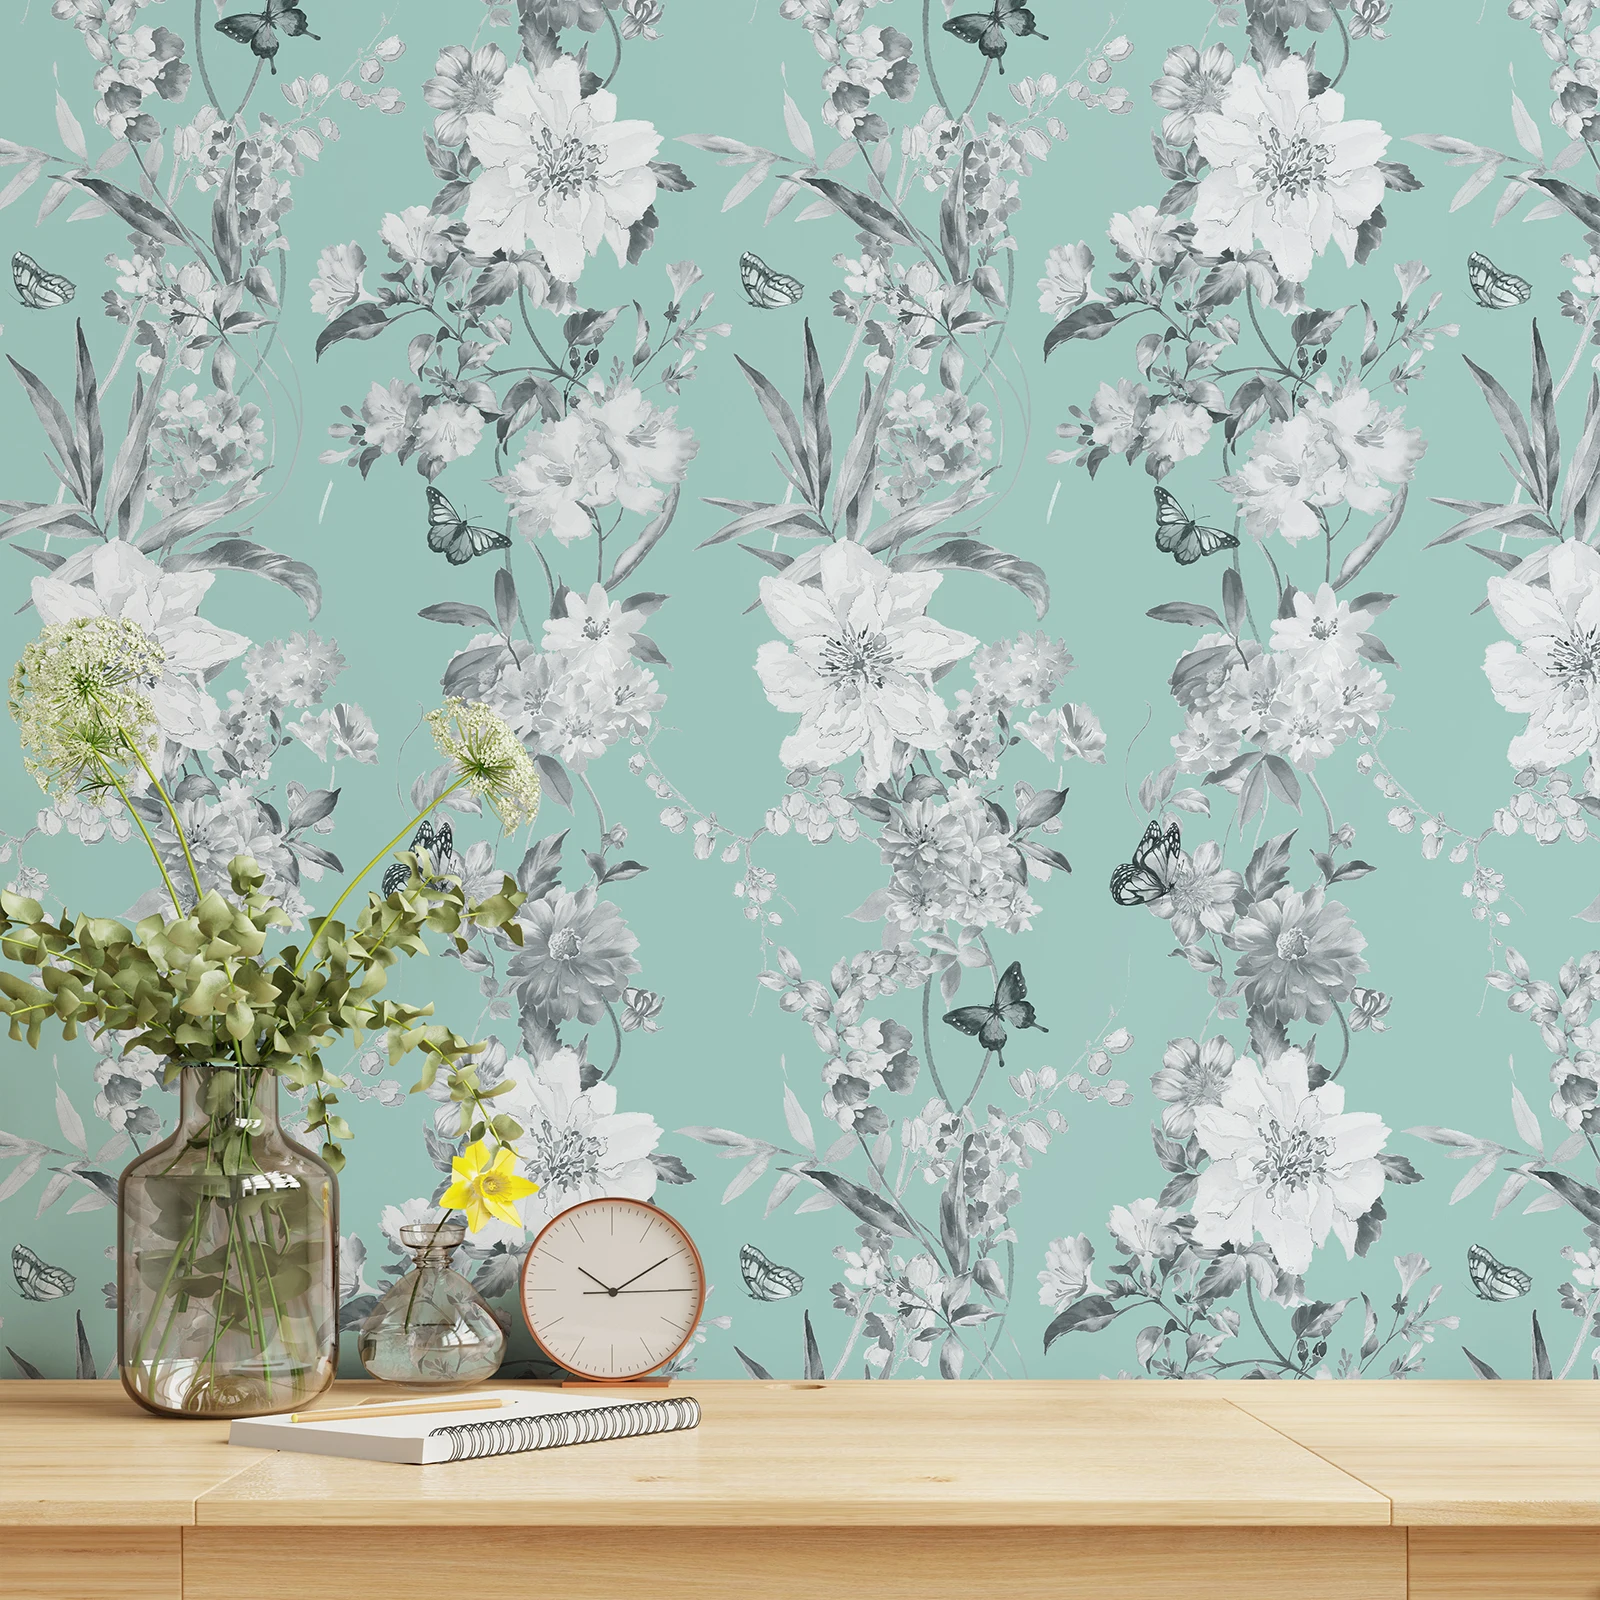 

Lake Blue Flower Vinyl Wallpaper Peel And Stick Floral Furniture Cabinet Sticker Waterproof Botanical Vathroom Wallpaper